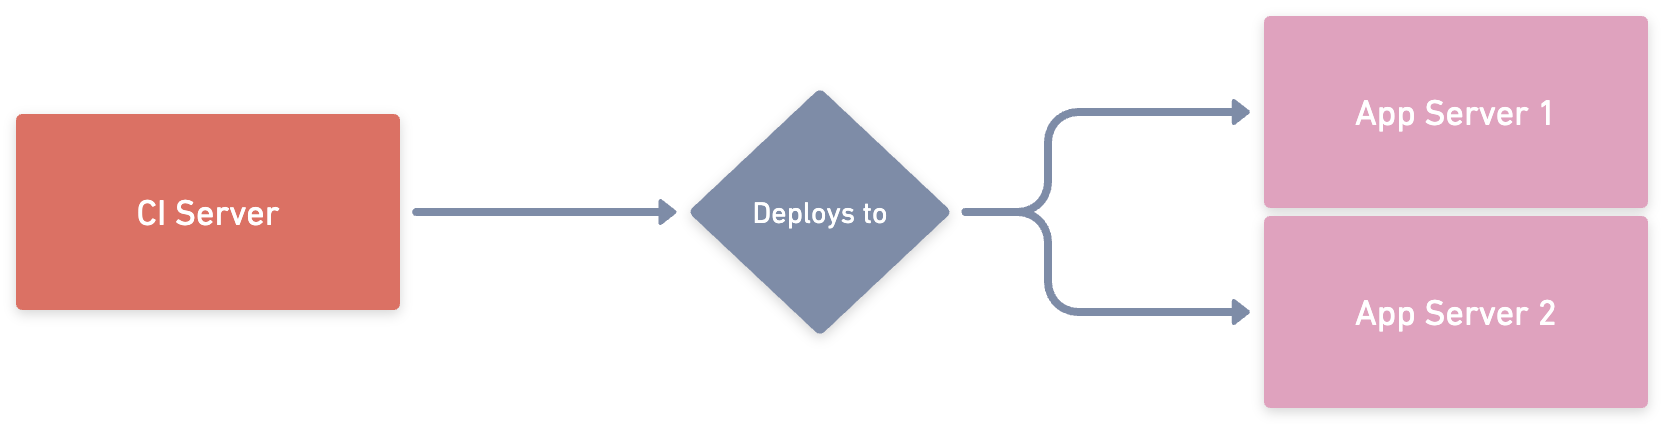 Diagram of deployment architecture